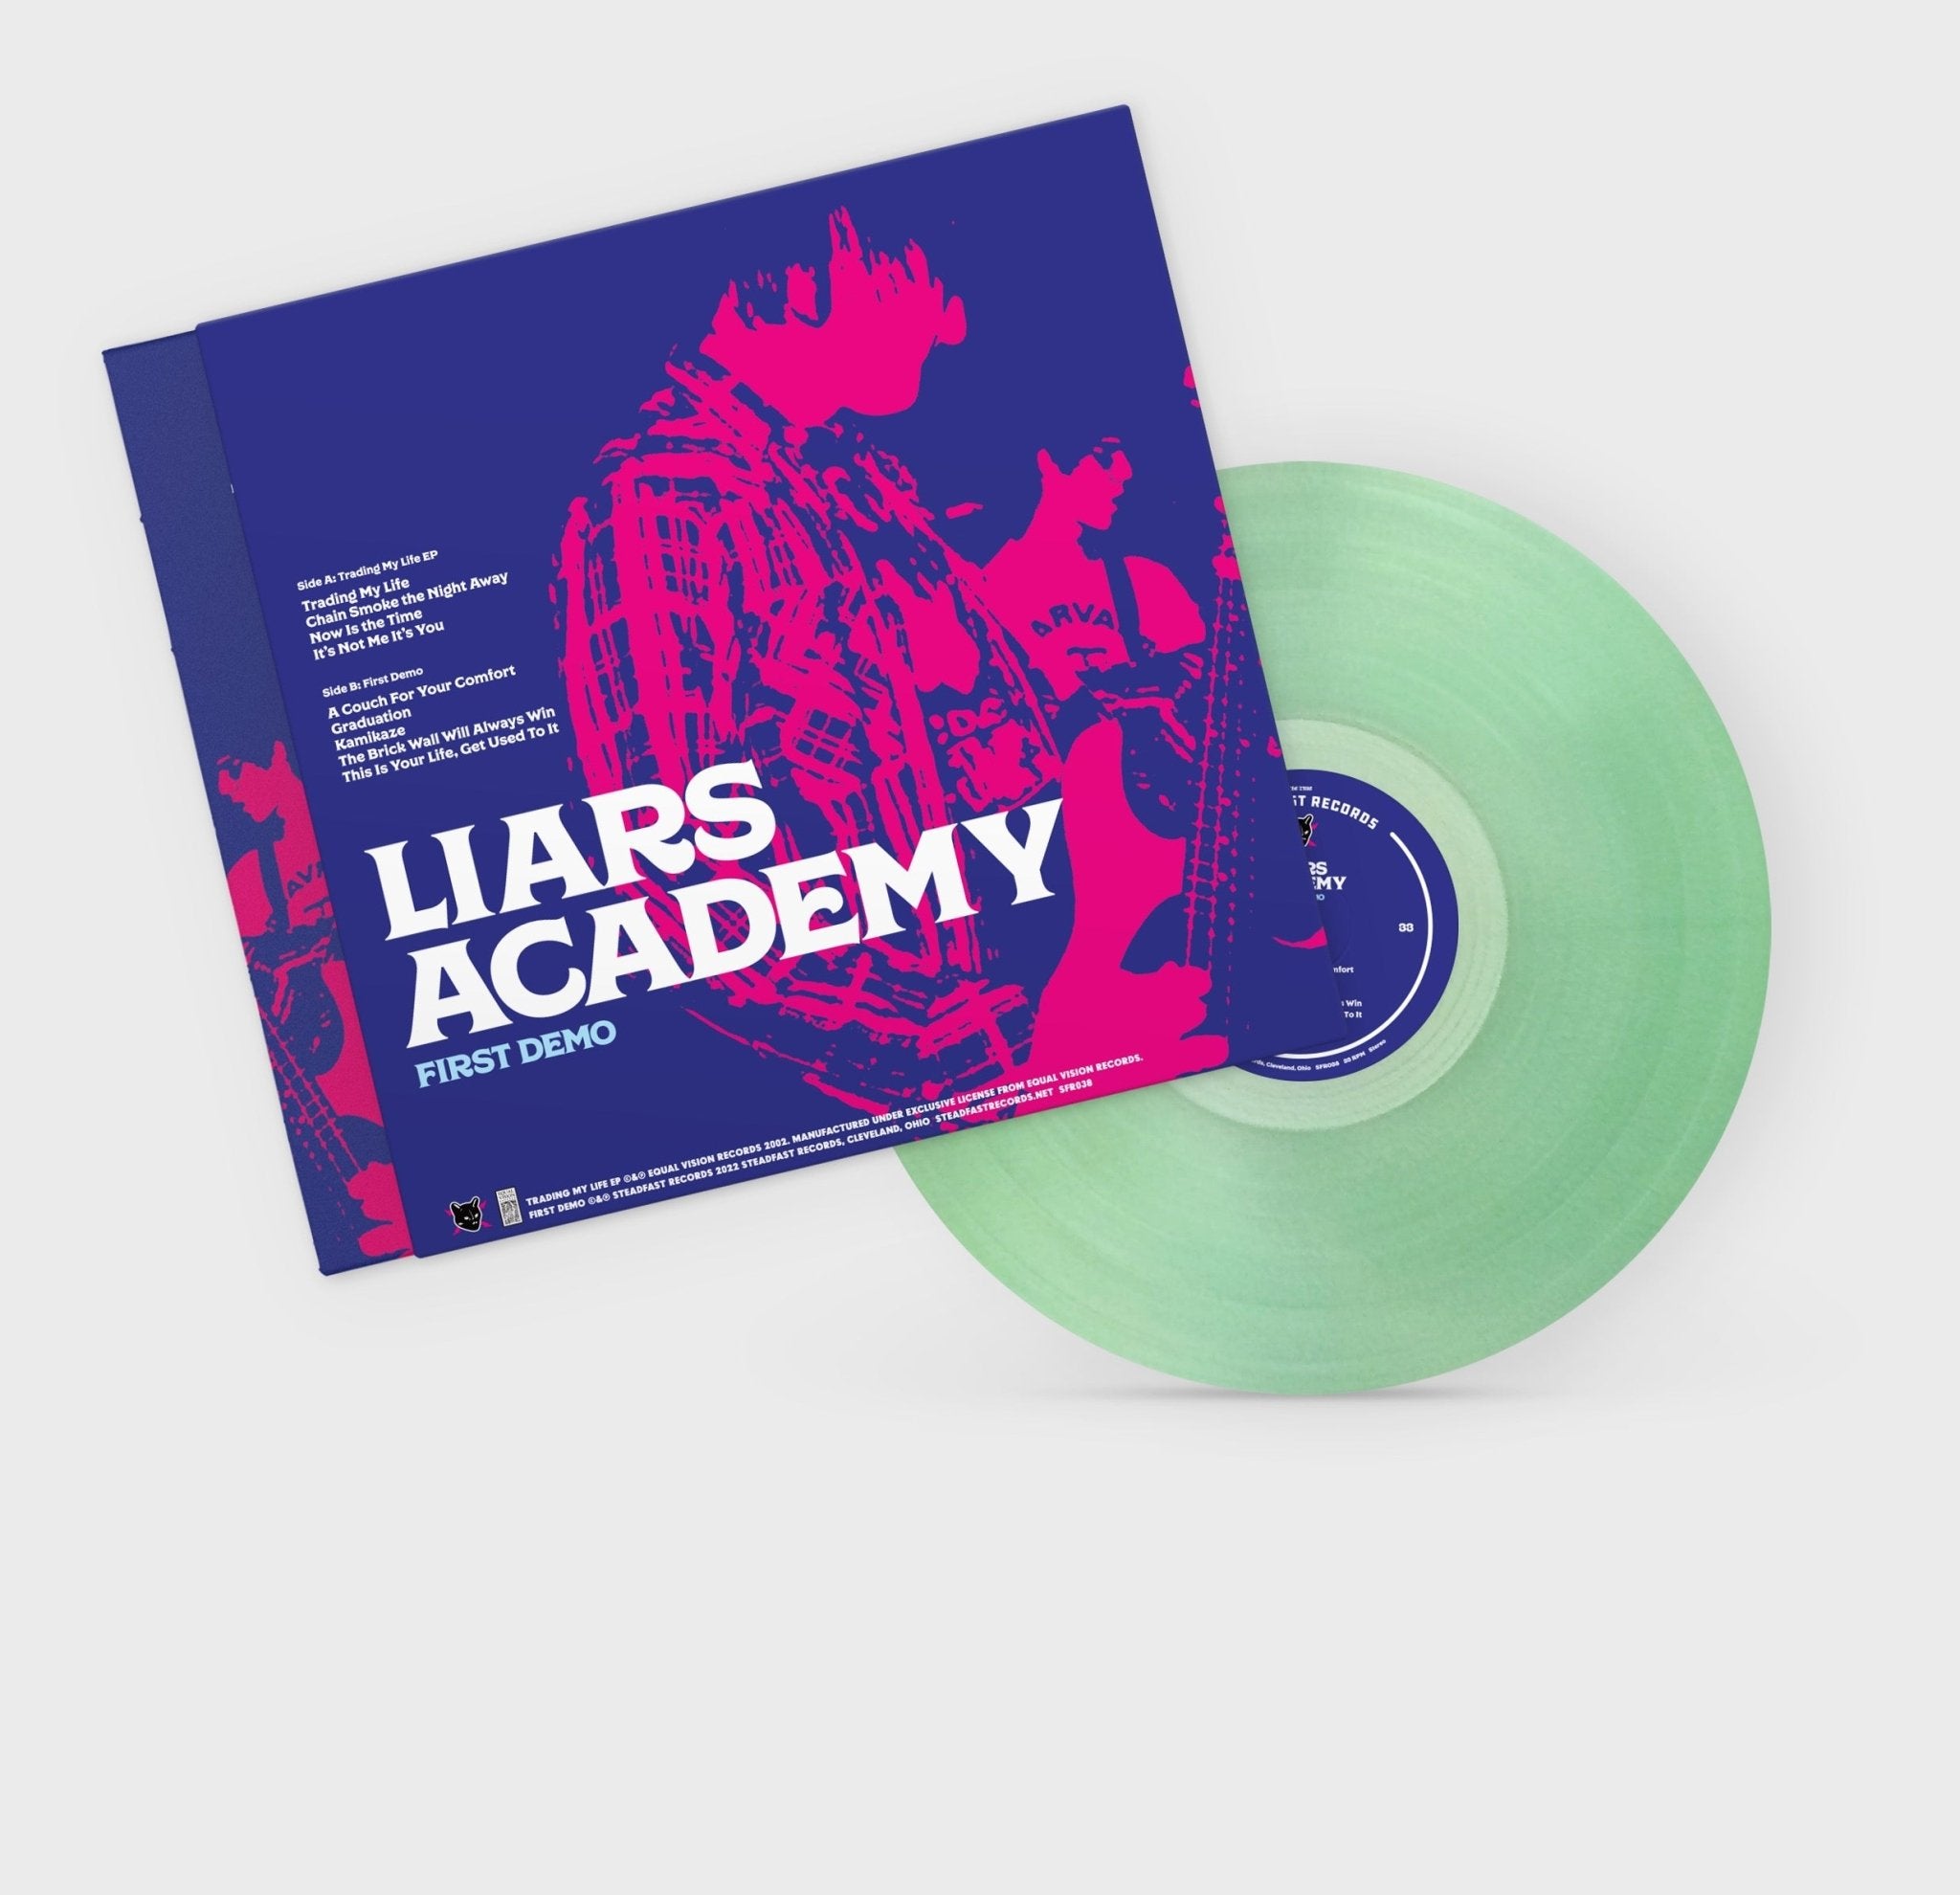 Liars Academy: Trading My Life + Bonus EP: Vinyl - Steadfast Records